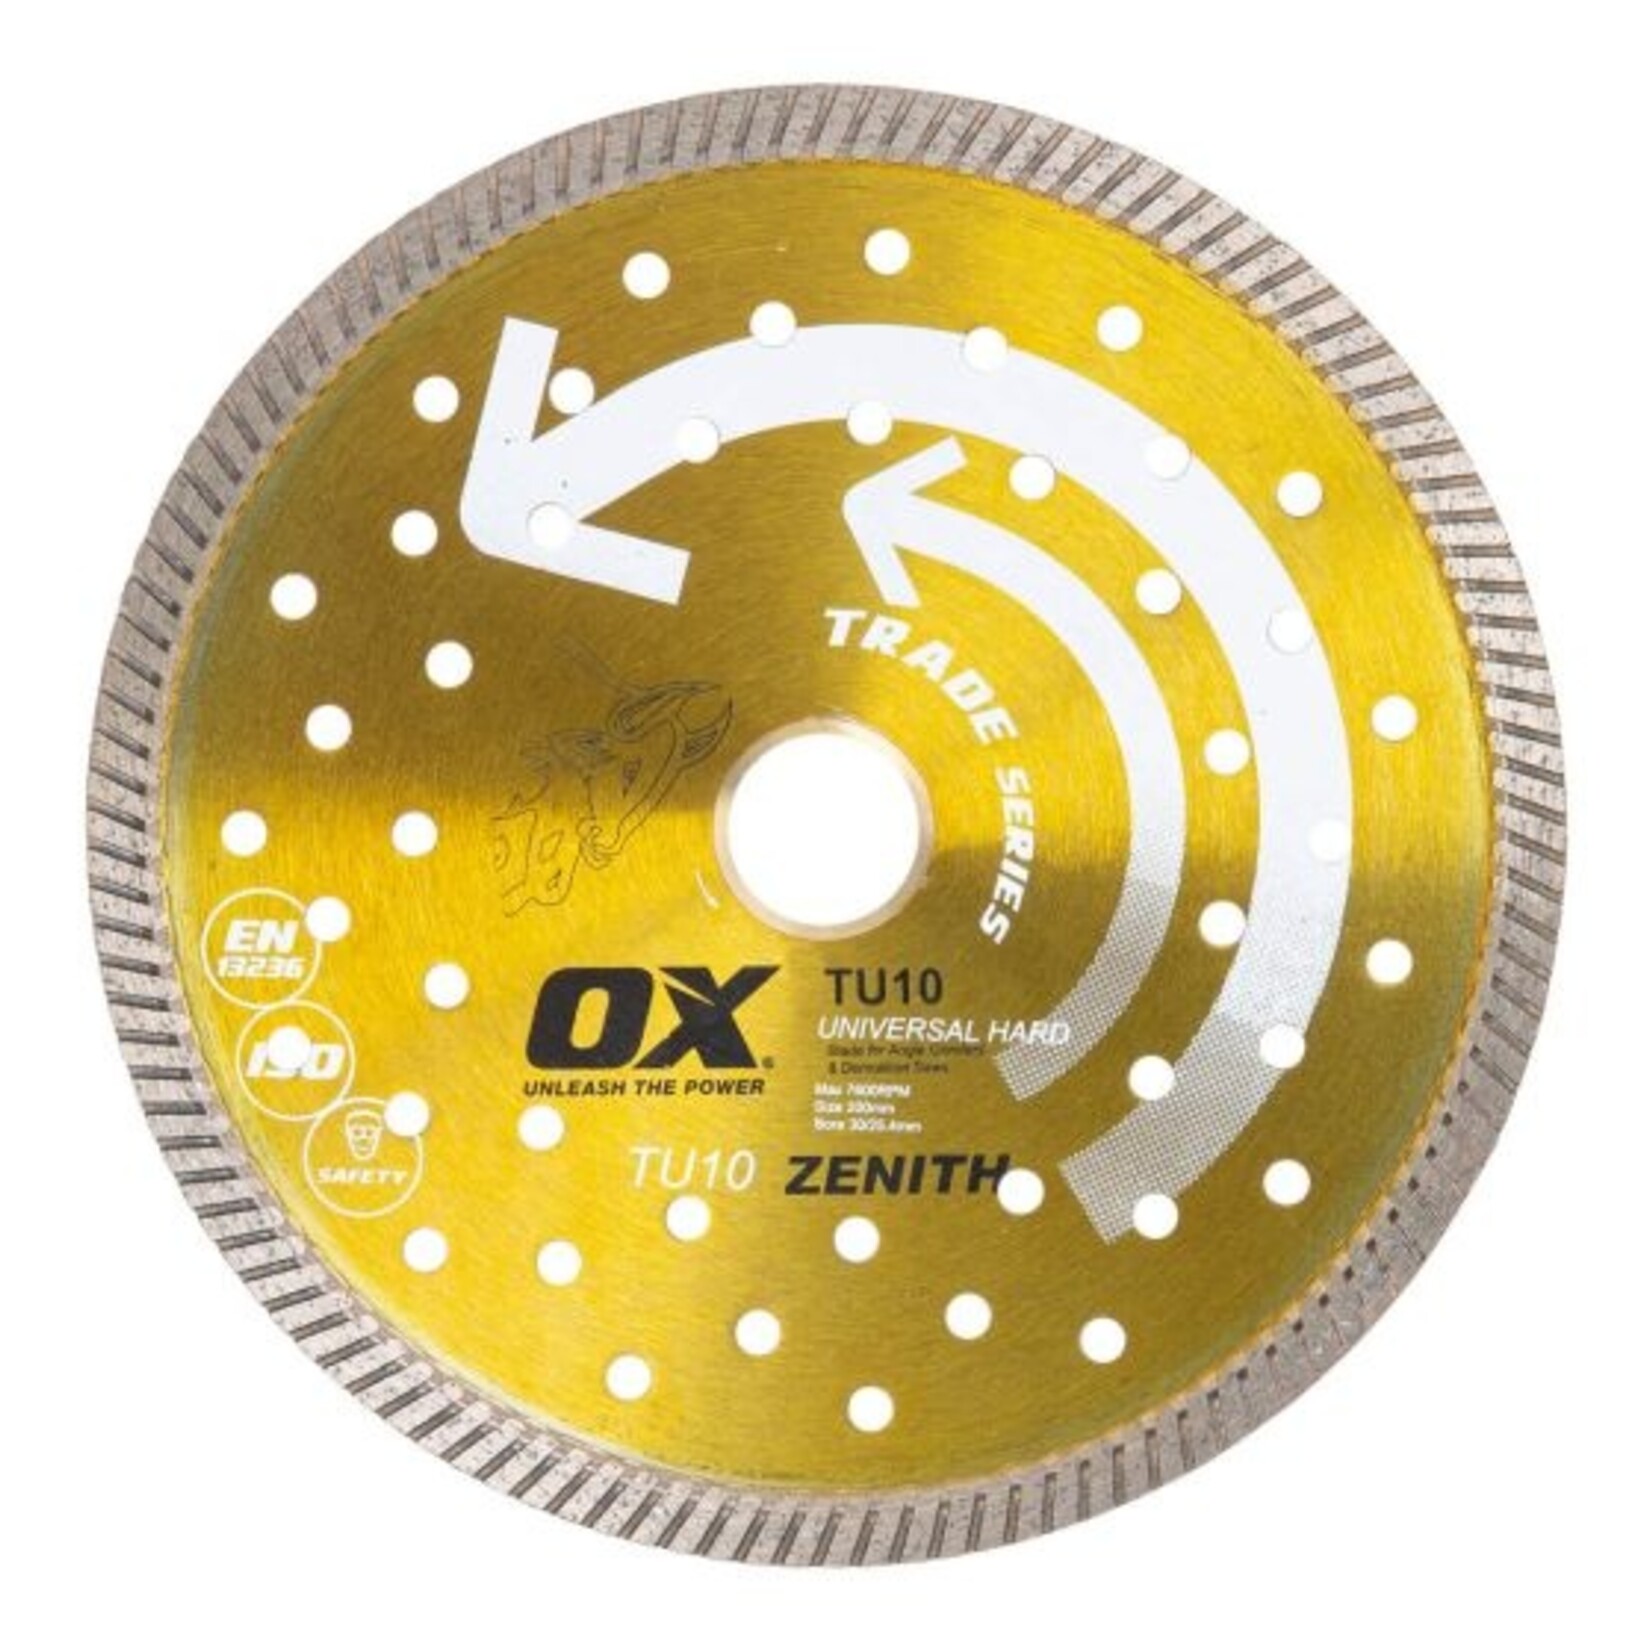 Ox Tools OX Premium Turbo Segmented Blade  - Universal/Hard